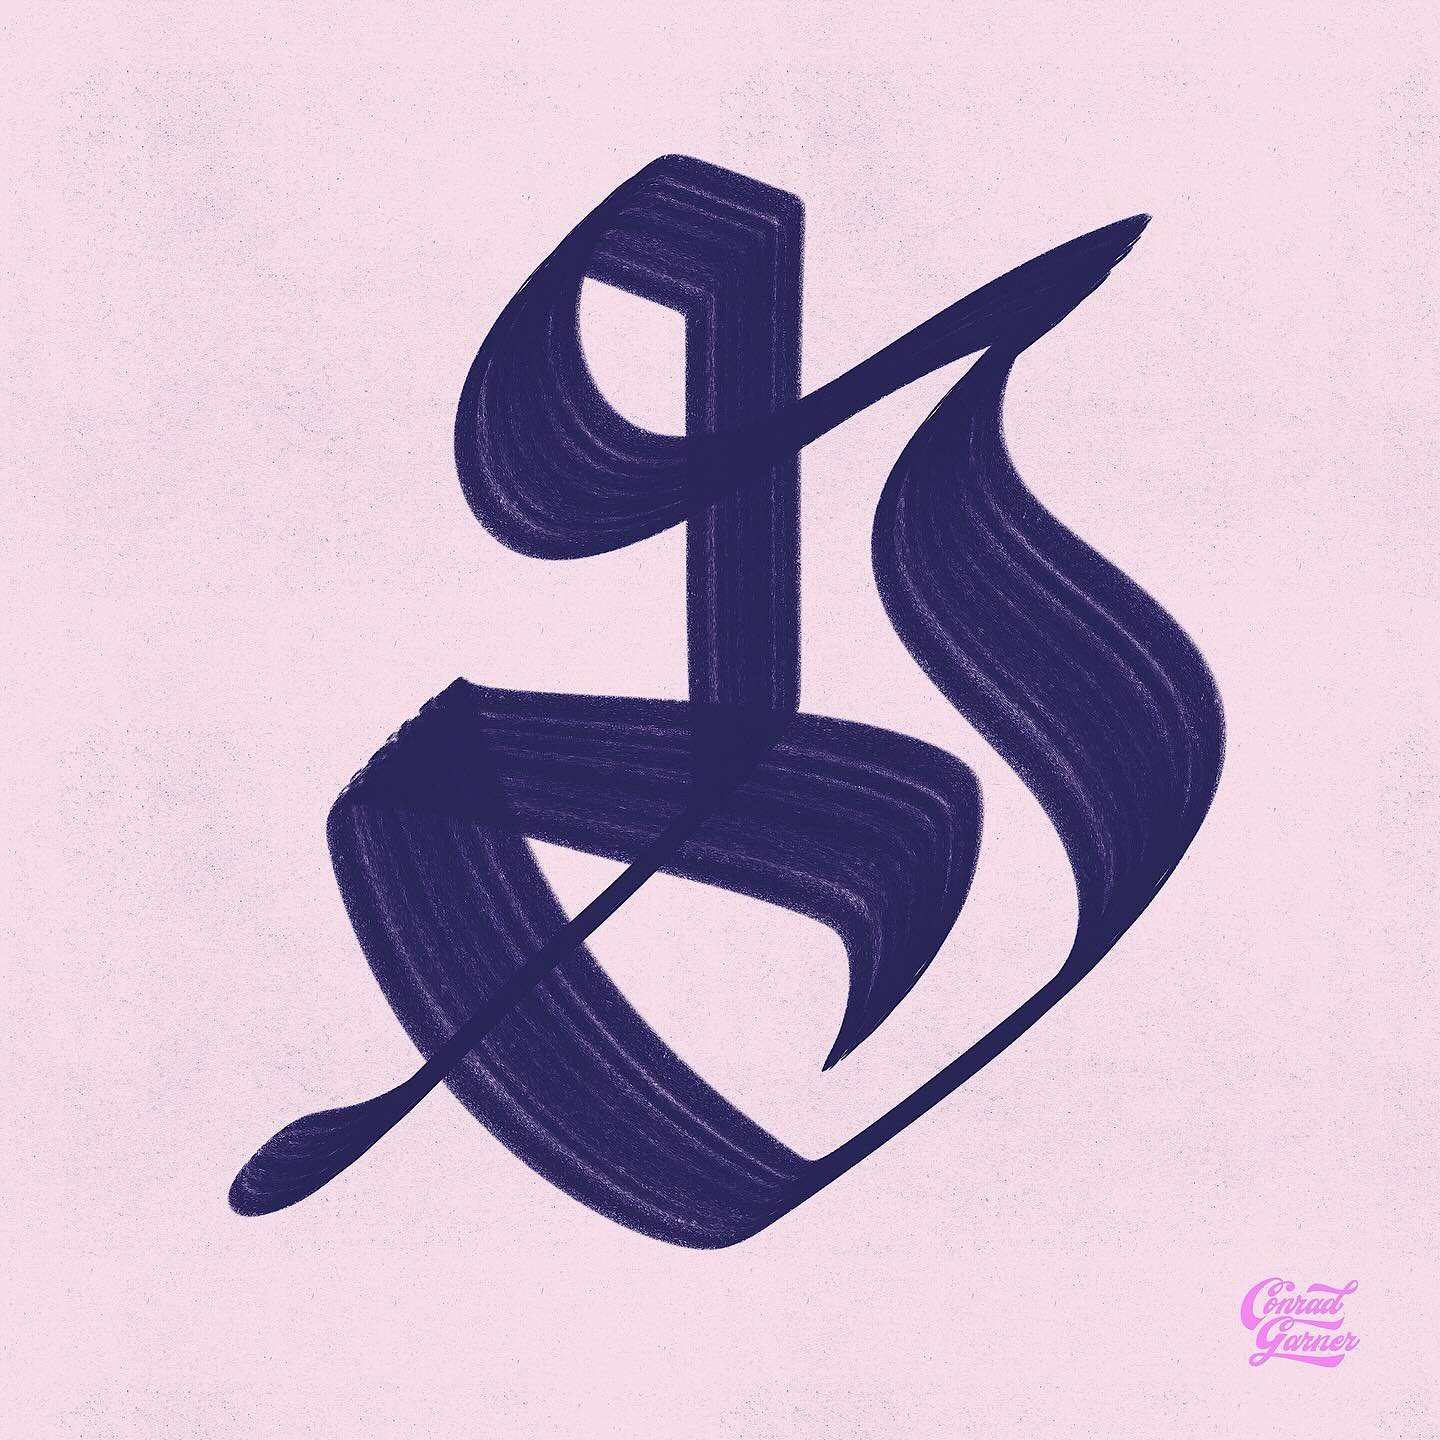 More G&rsquo;s. #illustration #g #letter #calligraphy #script #handletter #florida #tampa #design #designer #illustrator